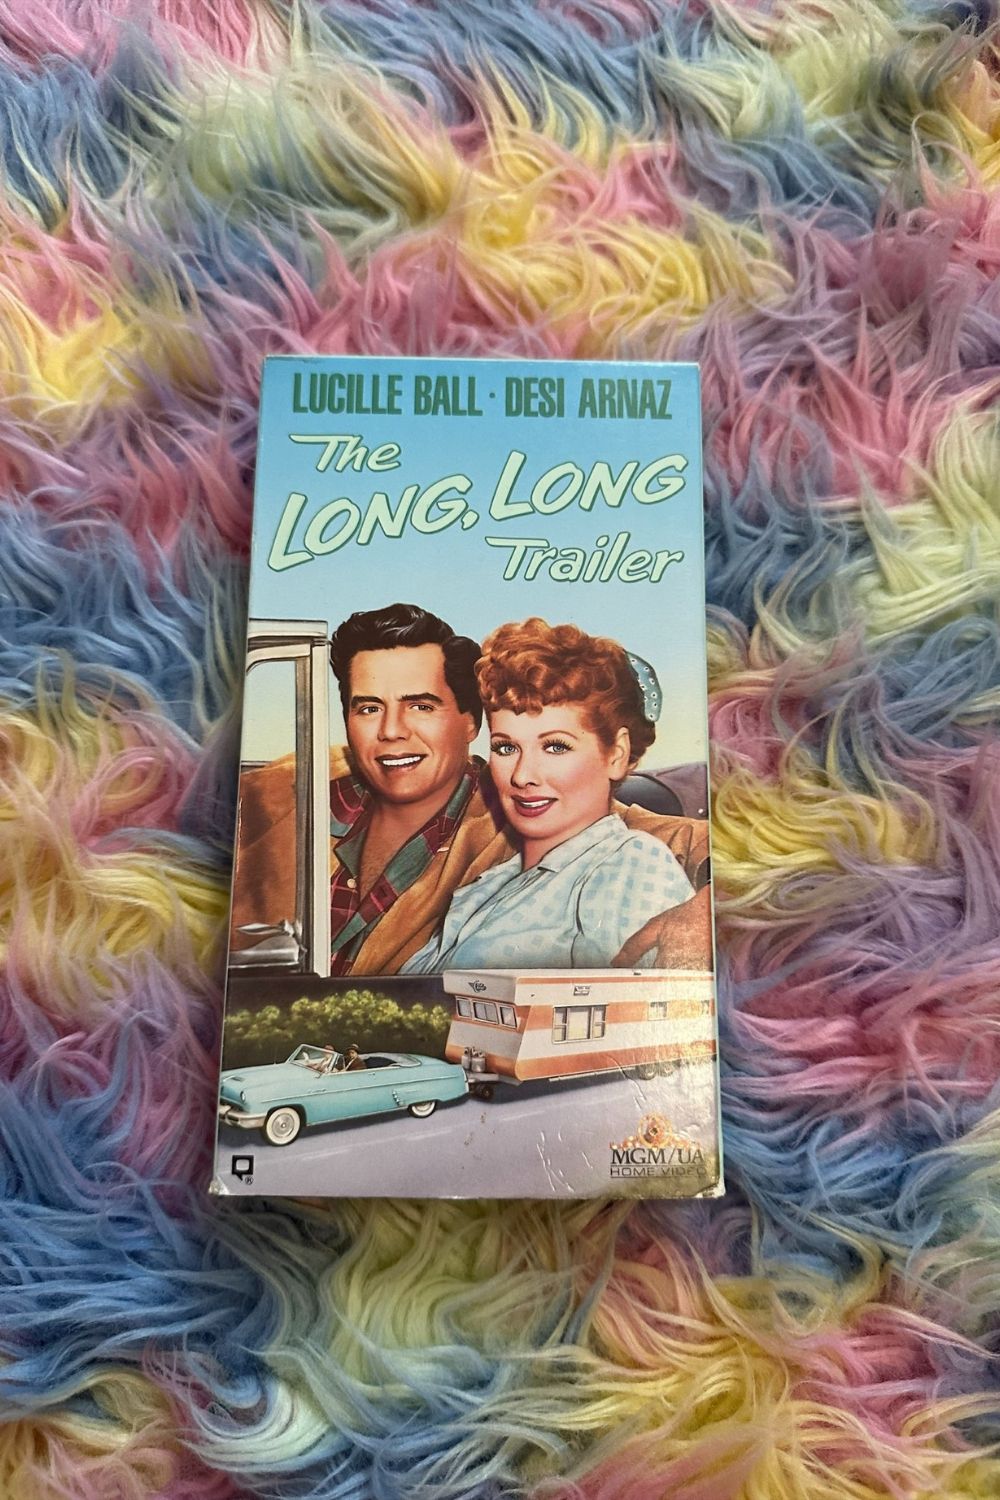 THE LONG LONG TRAILER VHS*